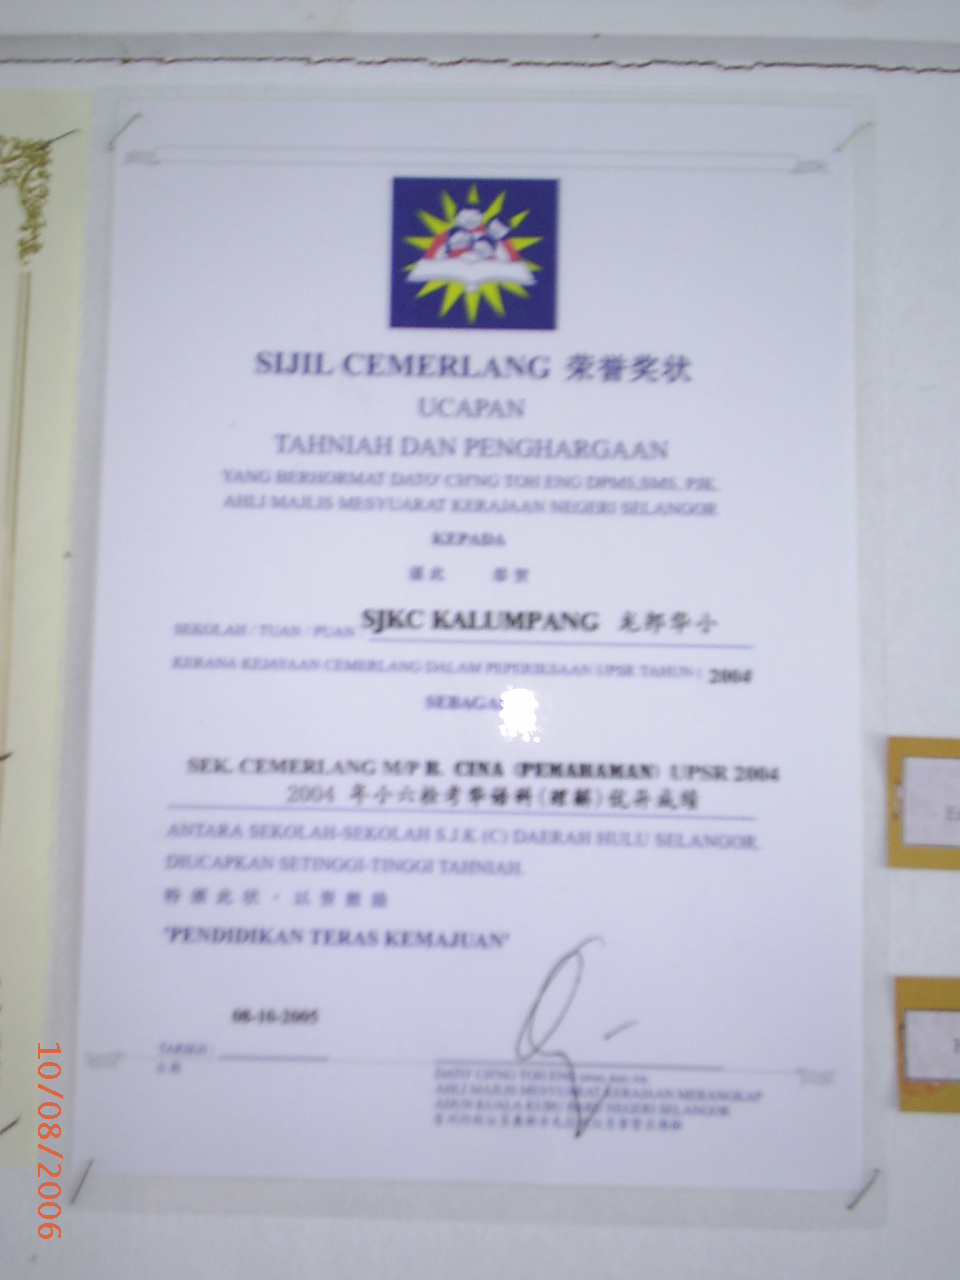 Anugerah Sekolah Cemerlang Mata Pelajaran Bahasa Cina (Pemahaman) UPSR Tahun 2004 